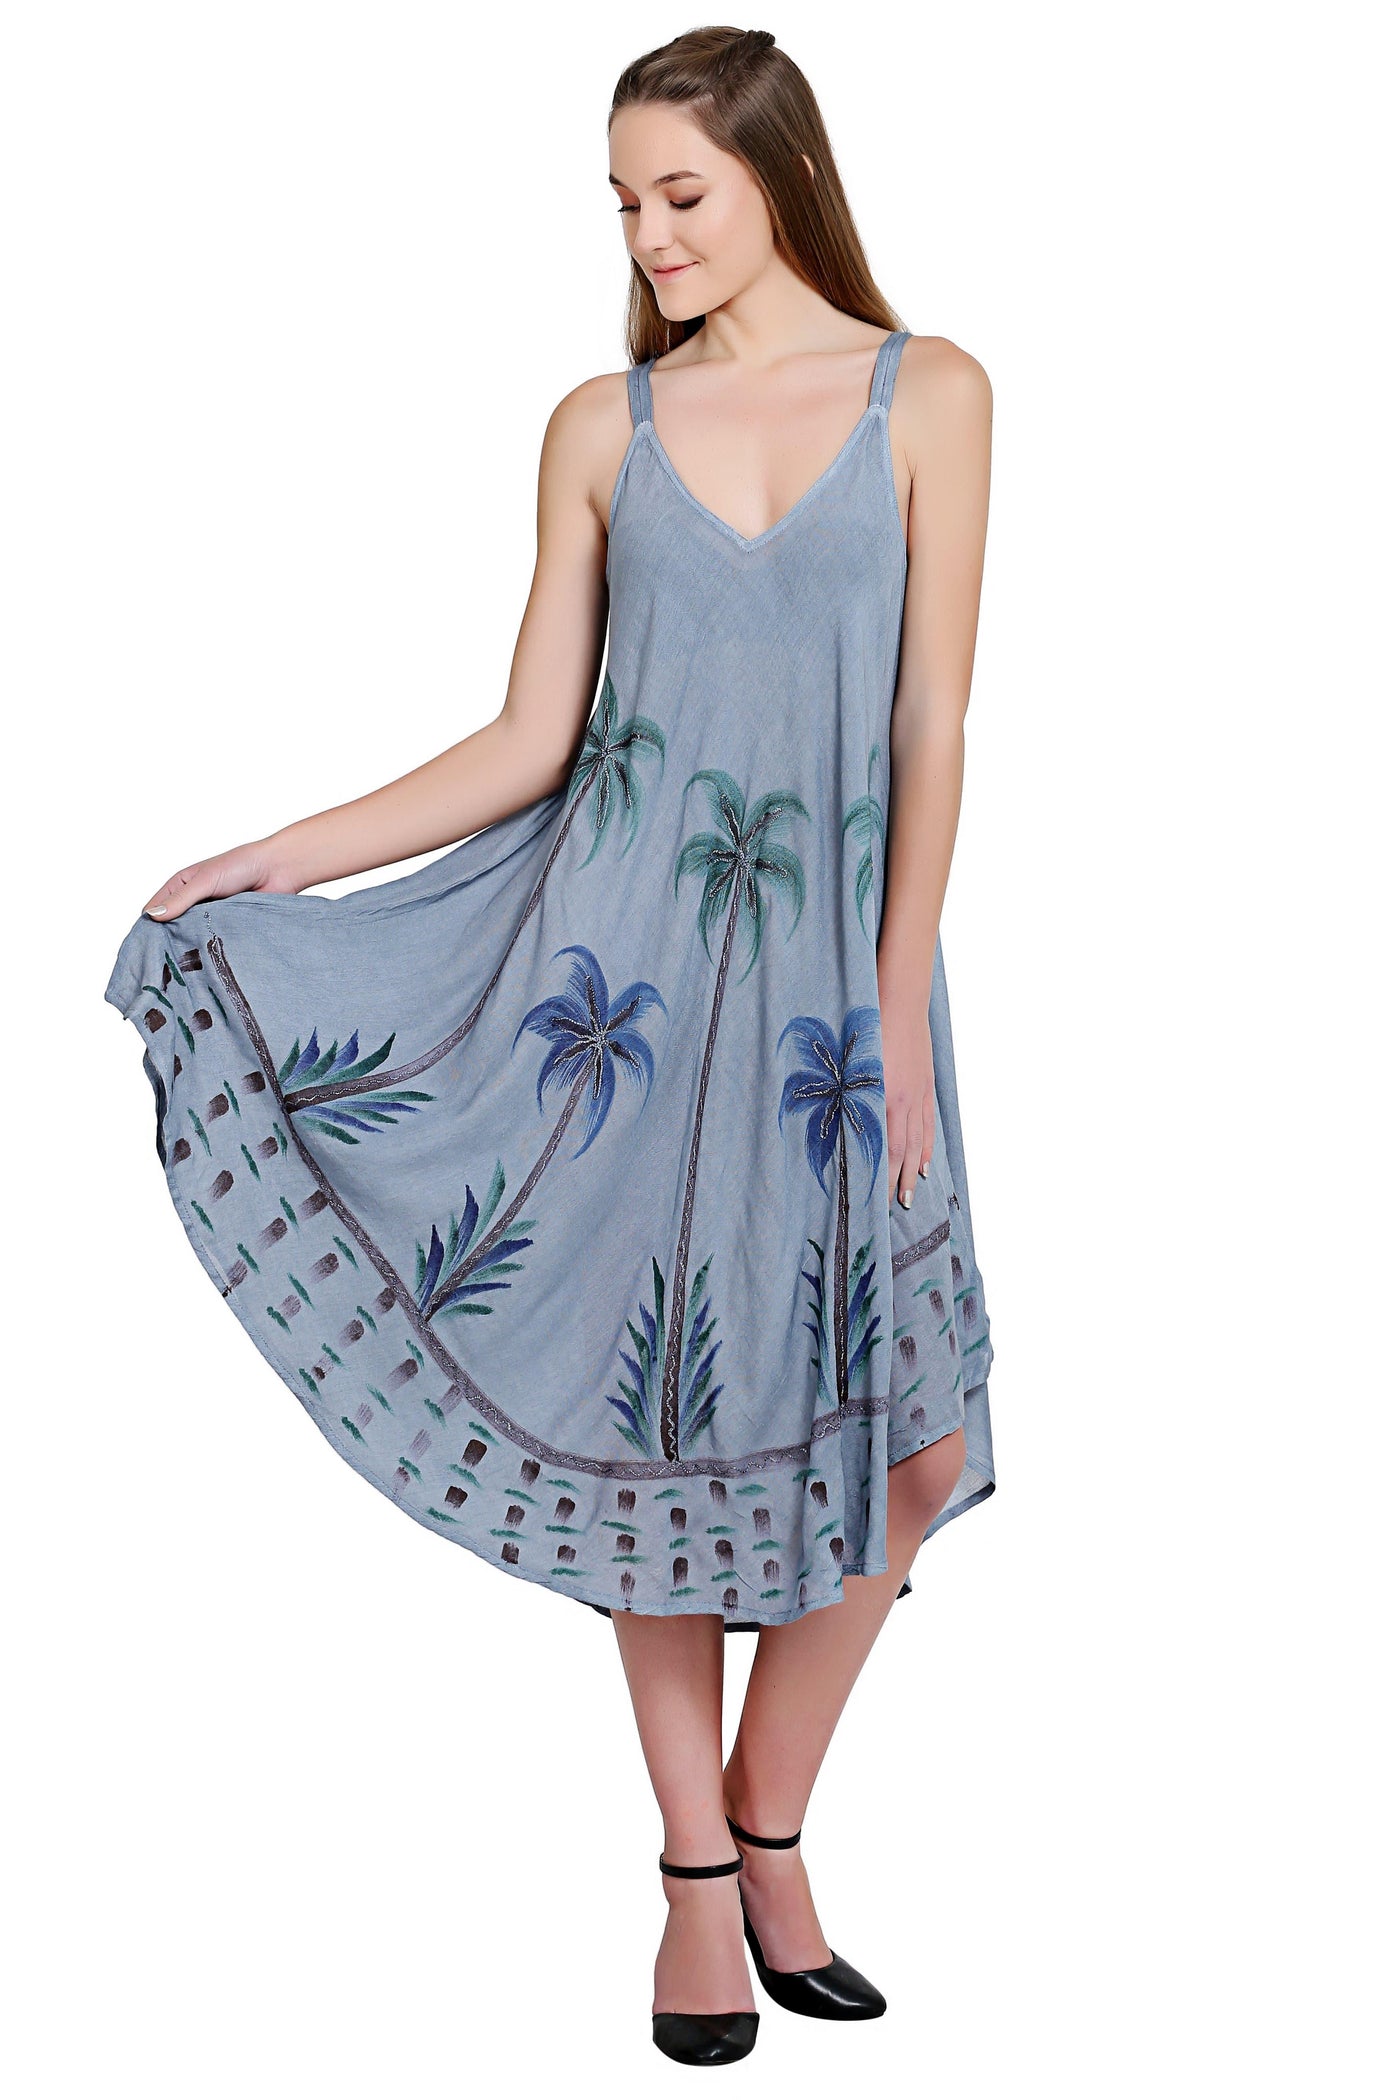 Hawaiian Palm Tree V-Neck Tie Dye Umbrella Dress 19333  - Advance Apparels Inc